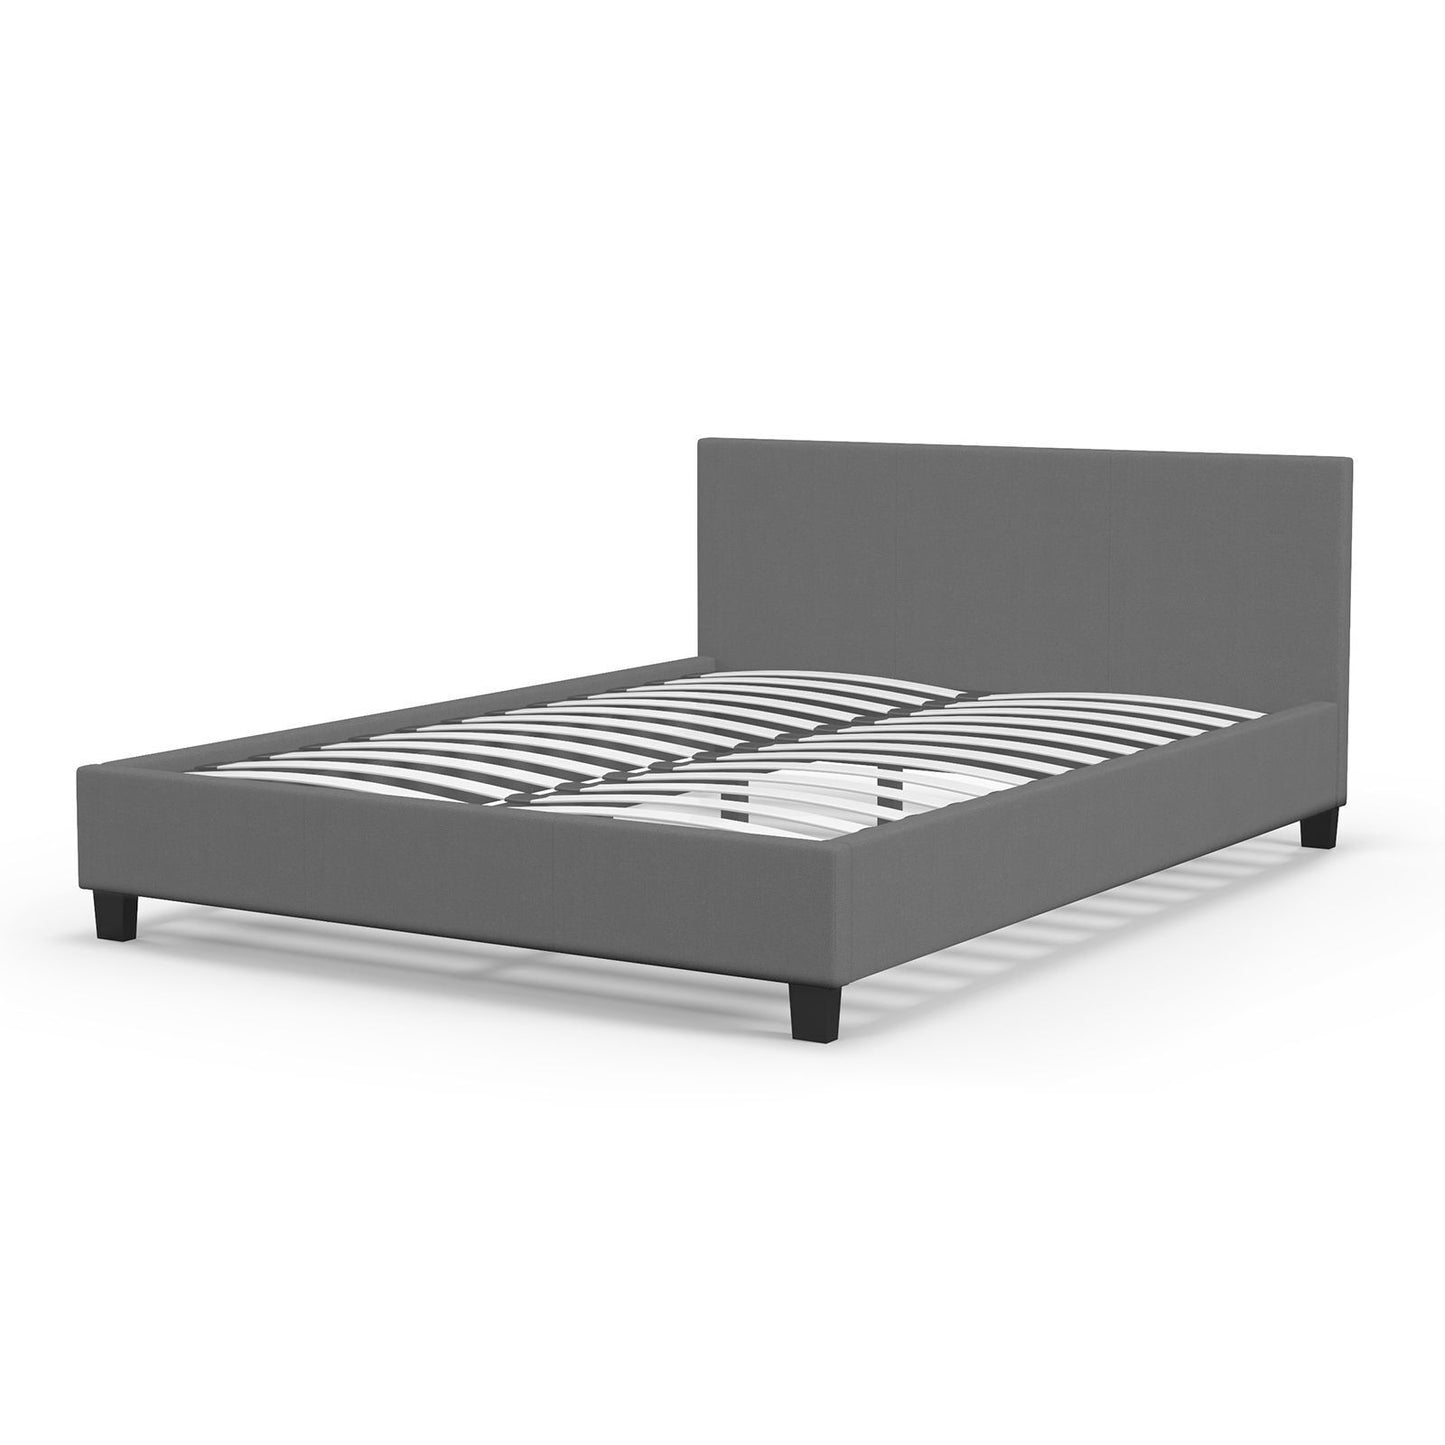 Sienna Luxury Bed with Headboard - Grey King Single